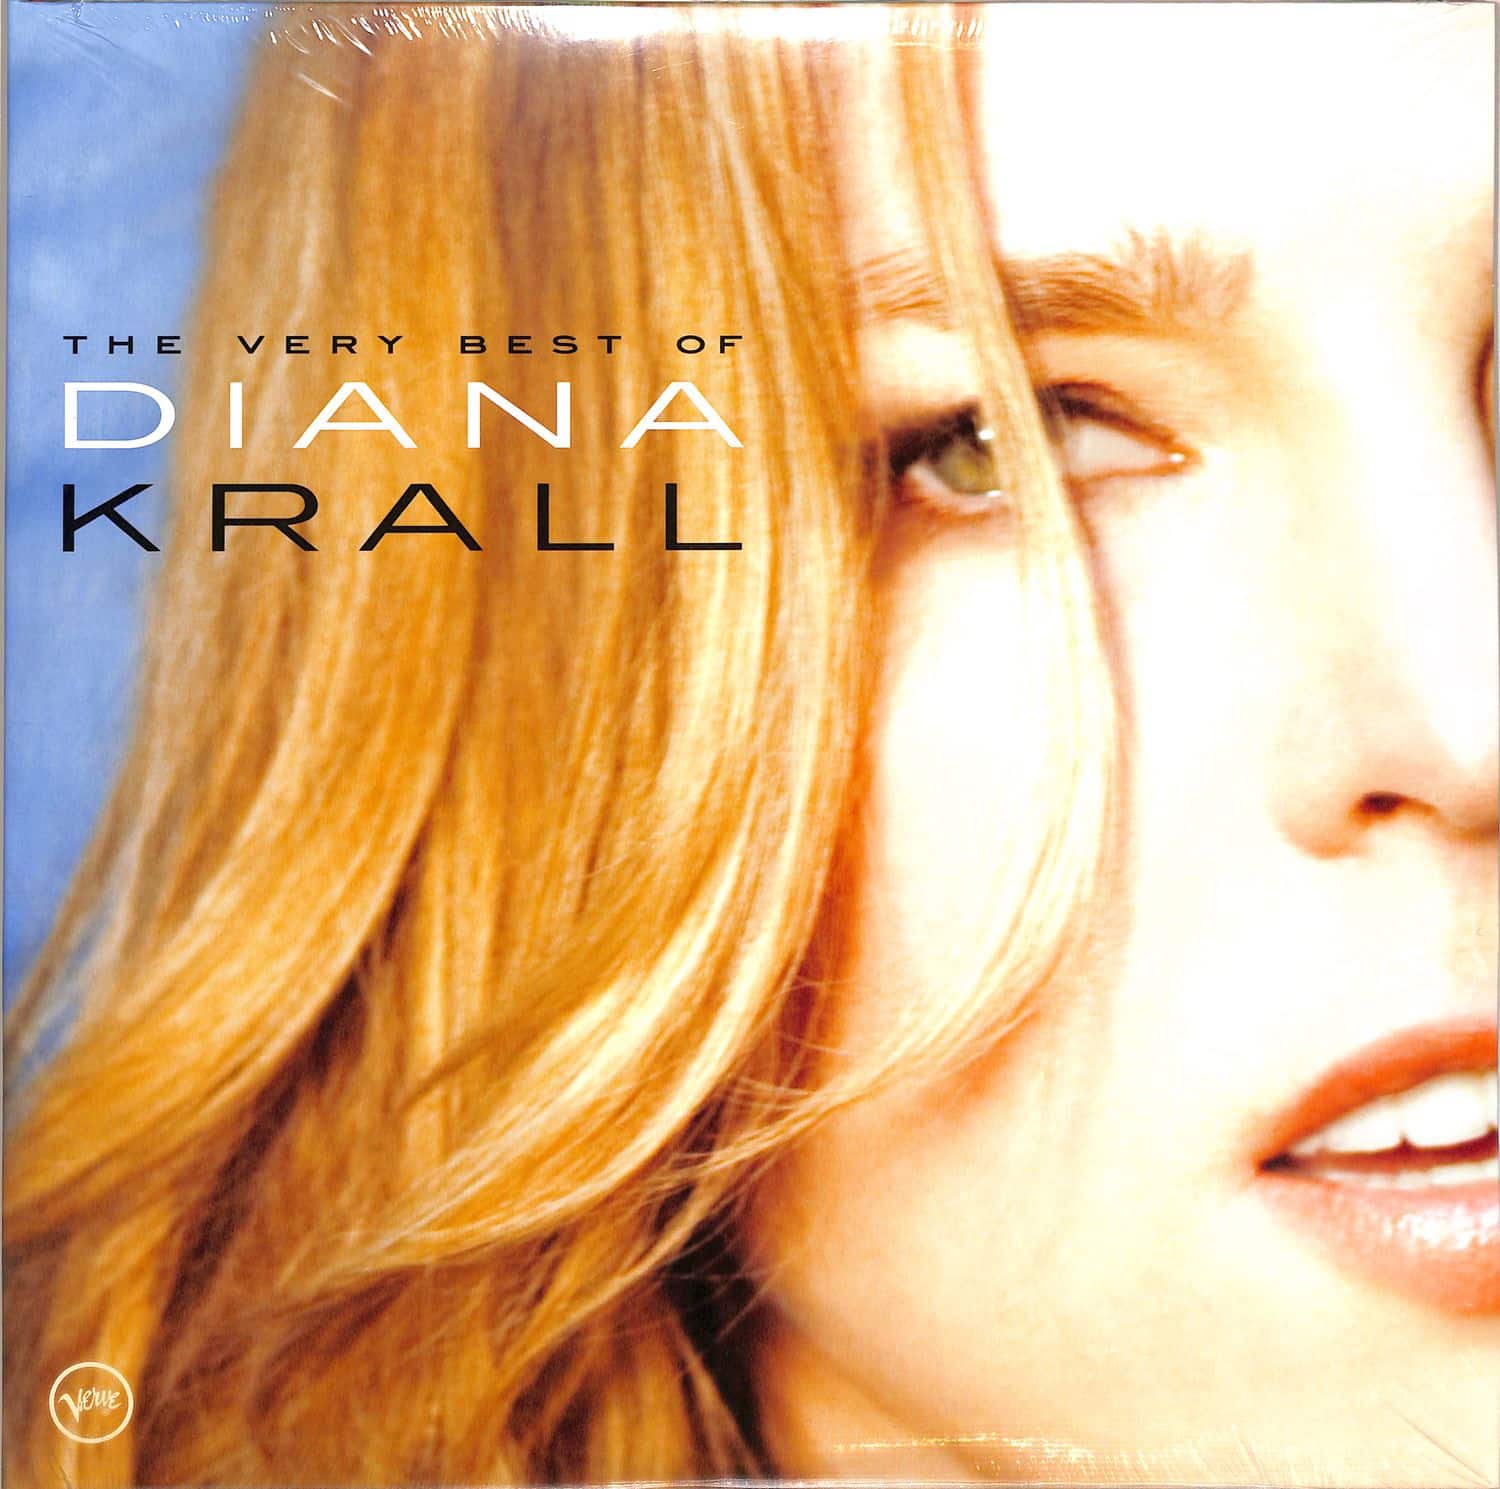 Diana Krall - THE VERY BEST OF DIANA KRALL 